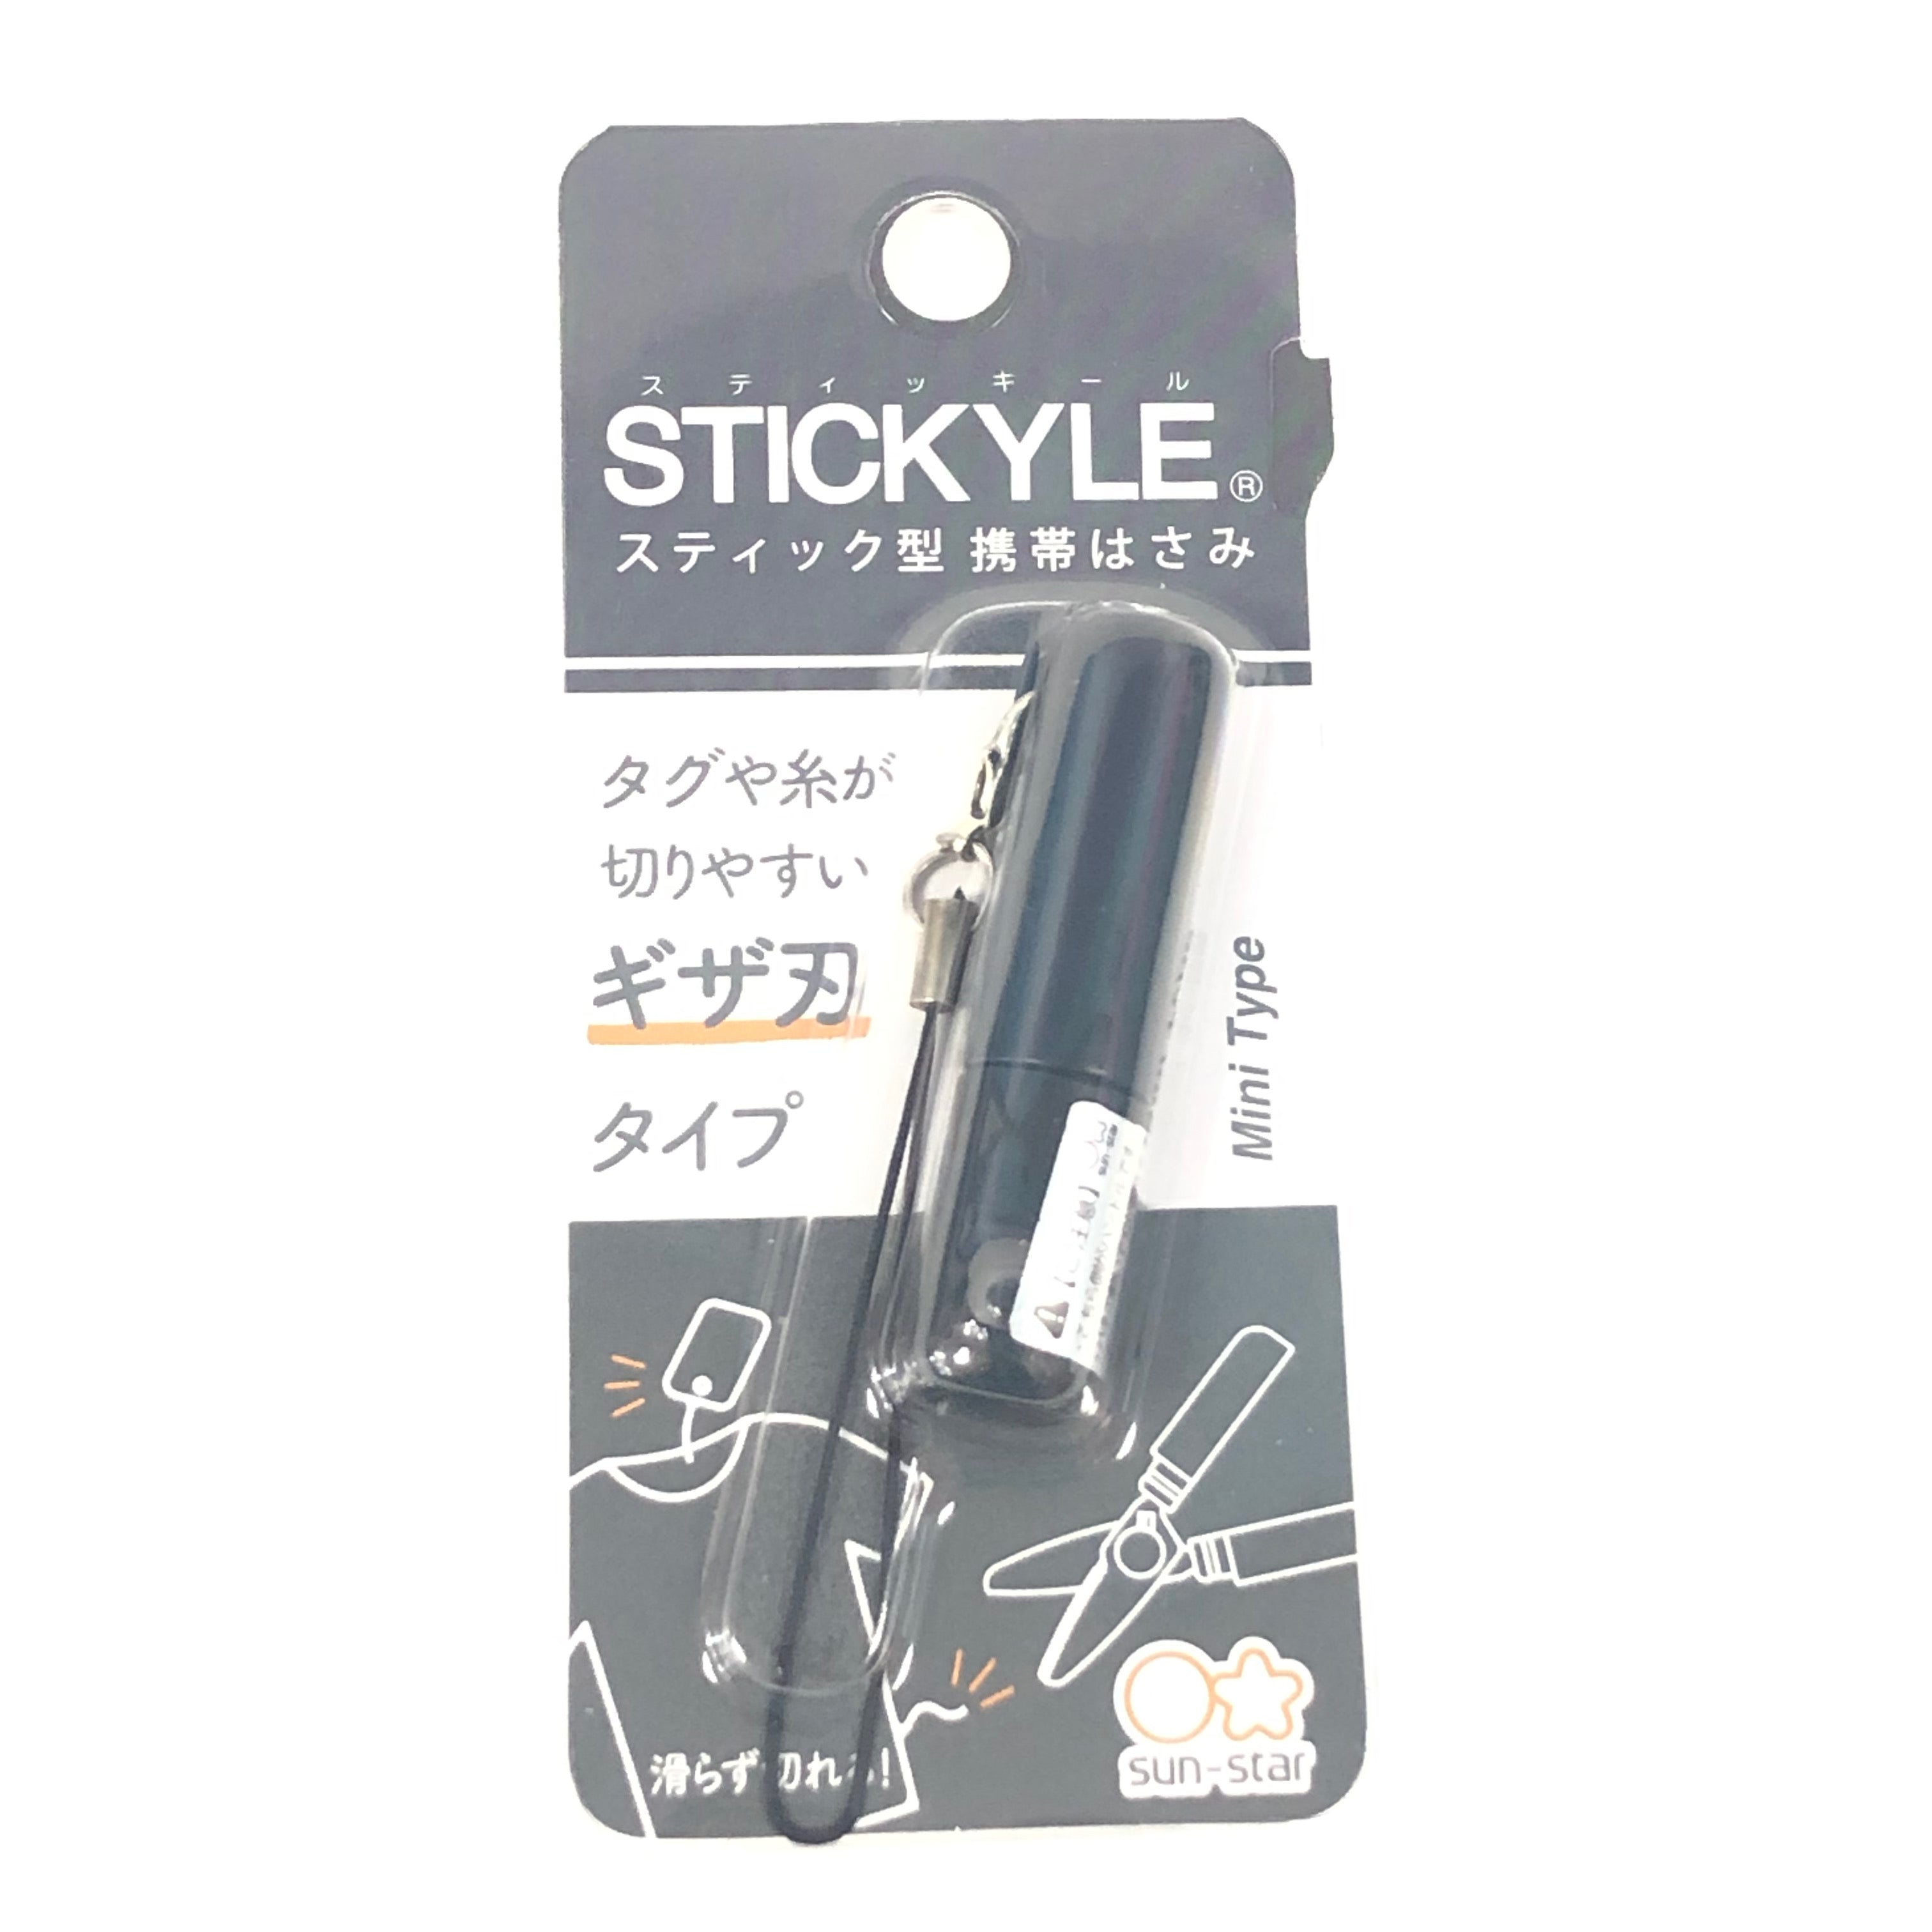 Stickyle Mini Black